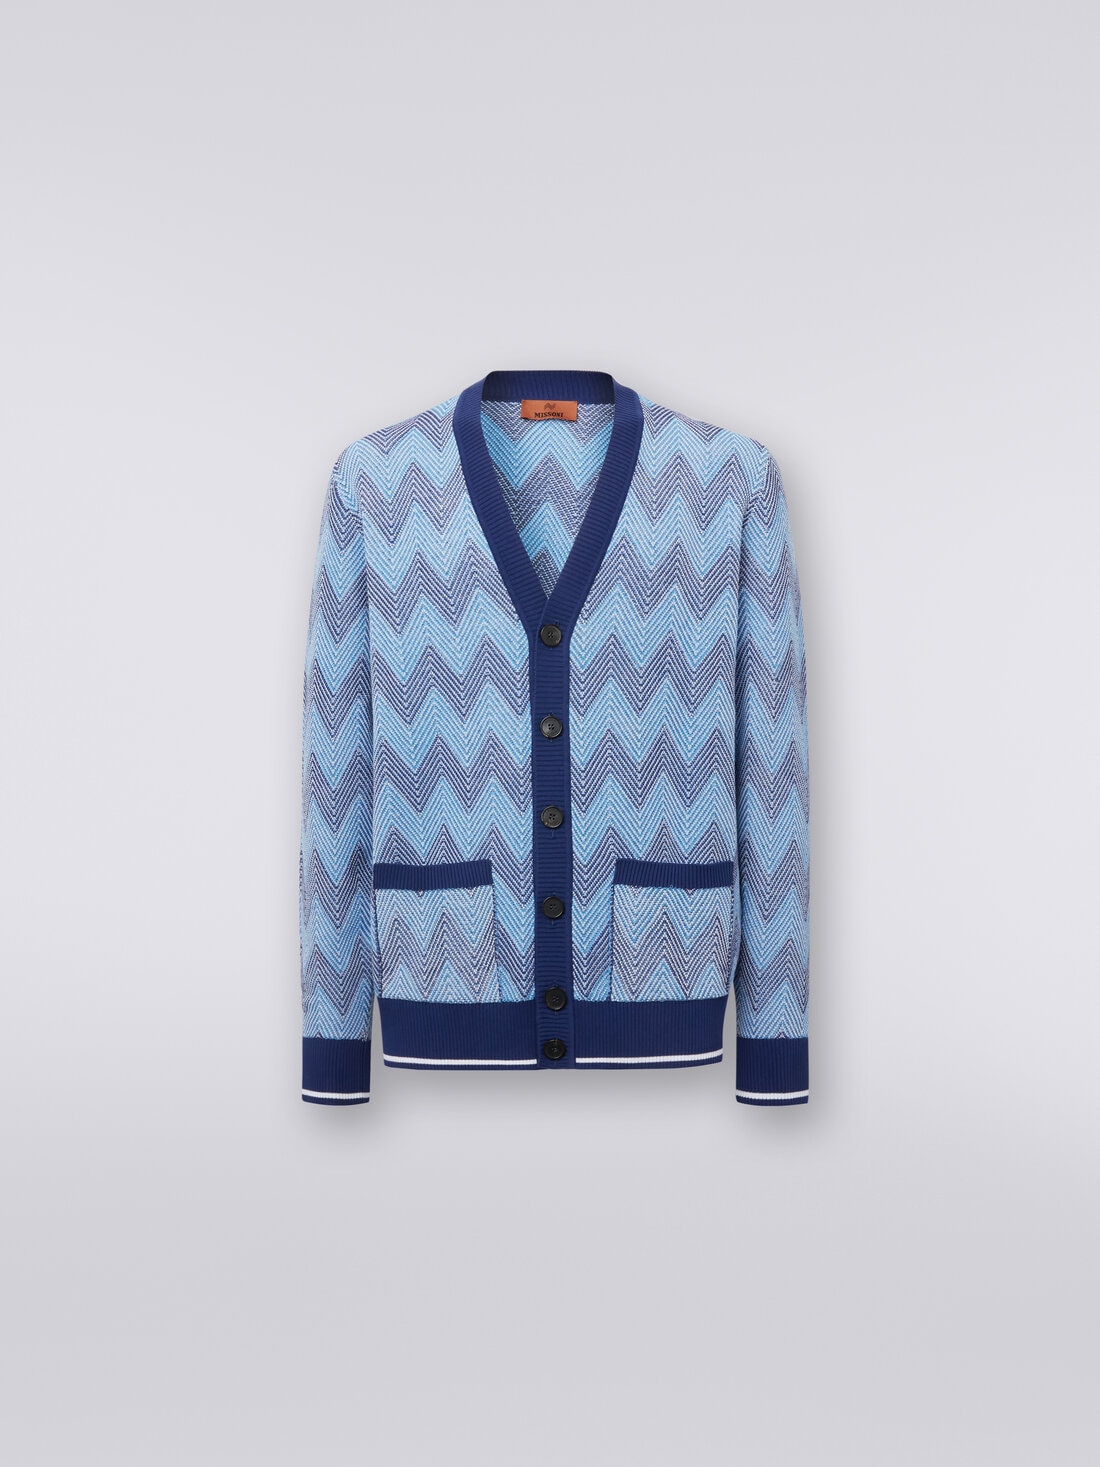 Cardigan in chevron cotton knit with contrasting trim, Blue - US24SM07BK034YS72F8 - 0